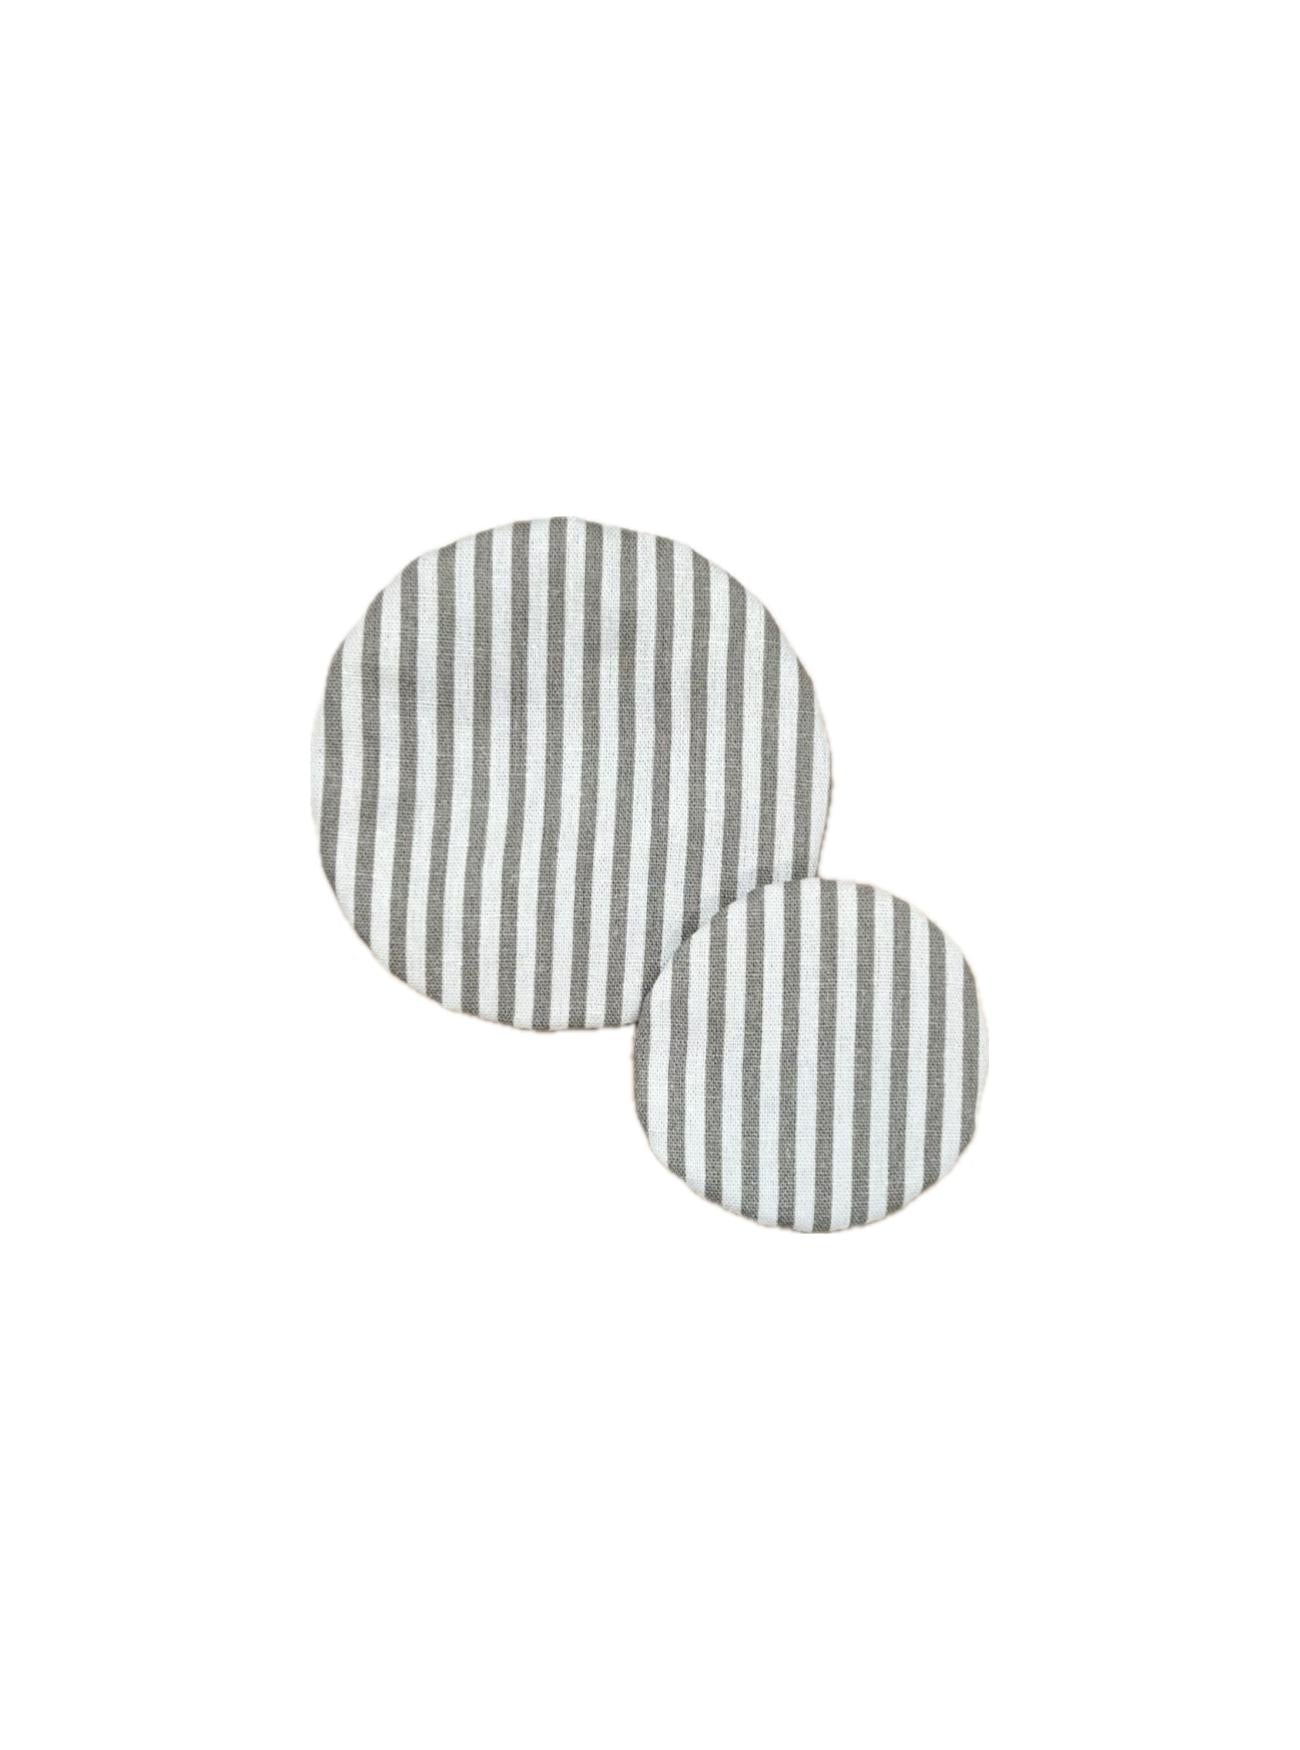 Beeswax Jar Covers, Grey Stripe